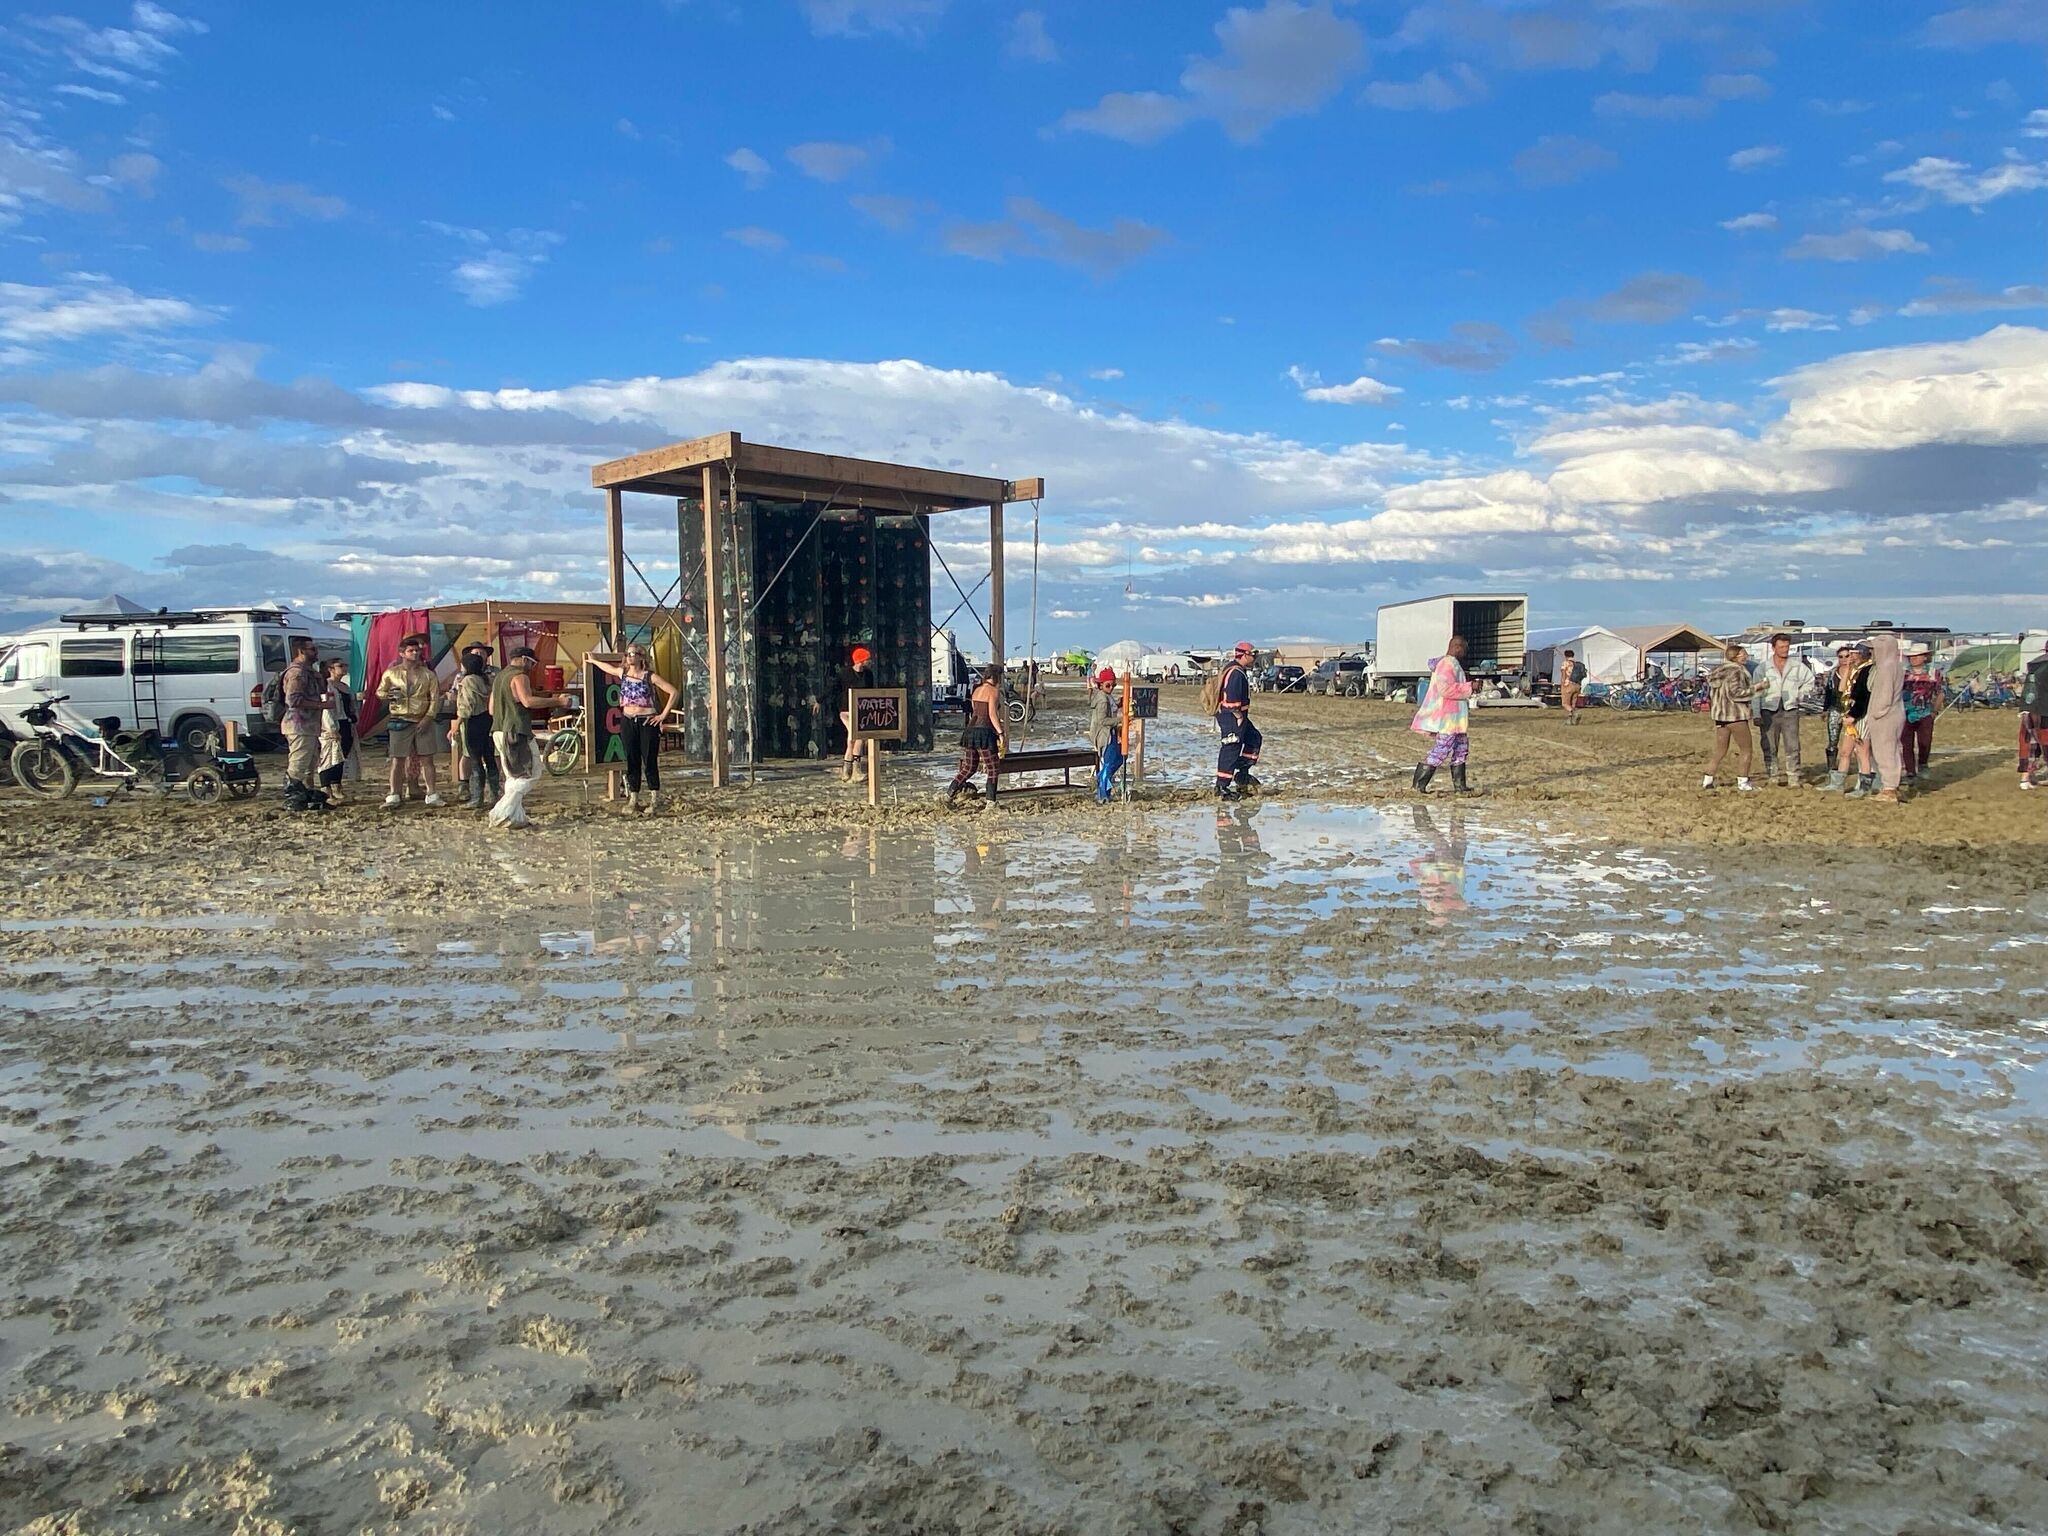 Burning Man’s mud-defying footwear trend show